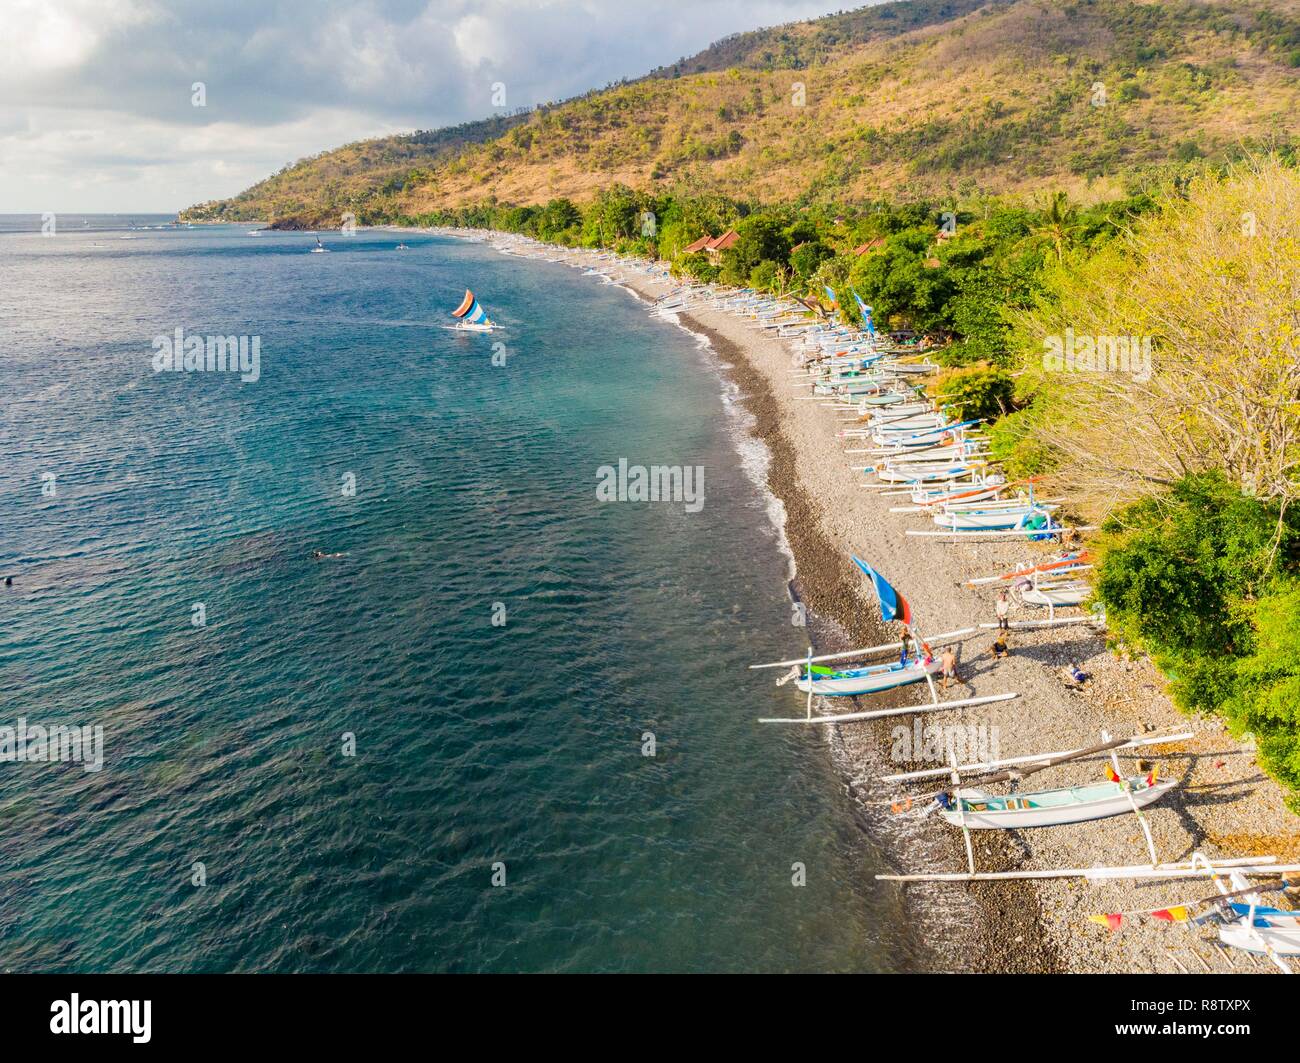 Indonesia, East Bali, Amlapura, Amed Costa, Selang spiaggia o spiaggia di sabbia bianca, tradizionali barche da pesca o Jukungs (vista aerea) Foto Stock